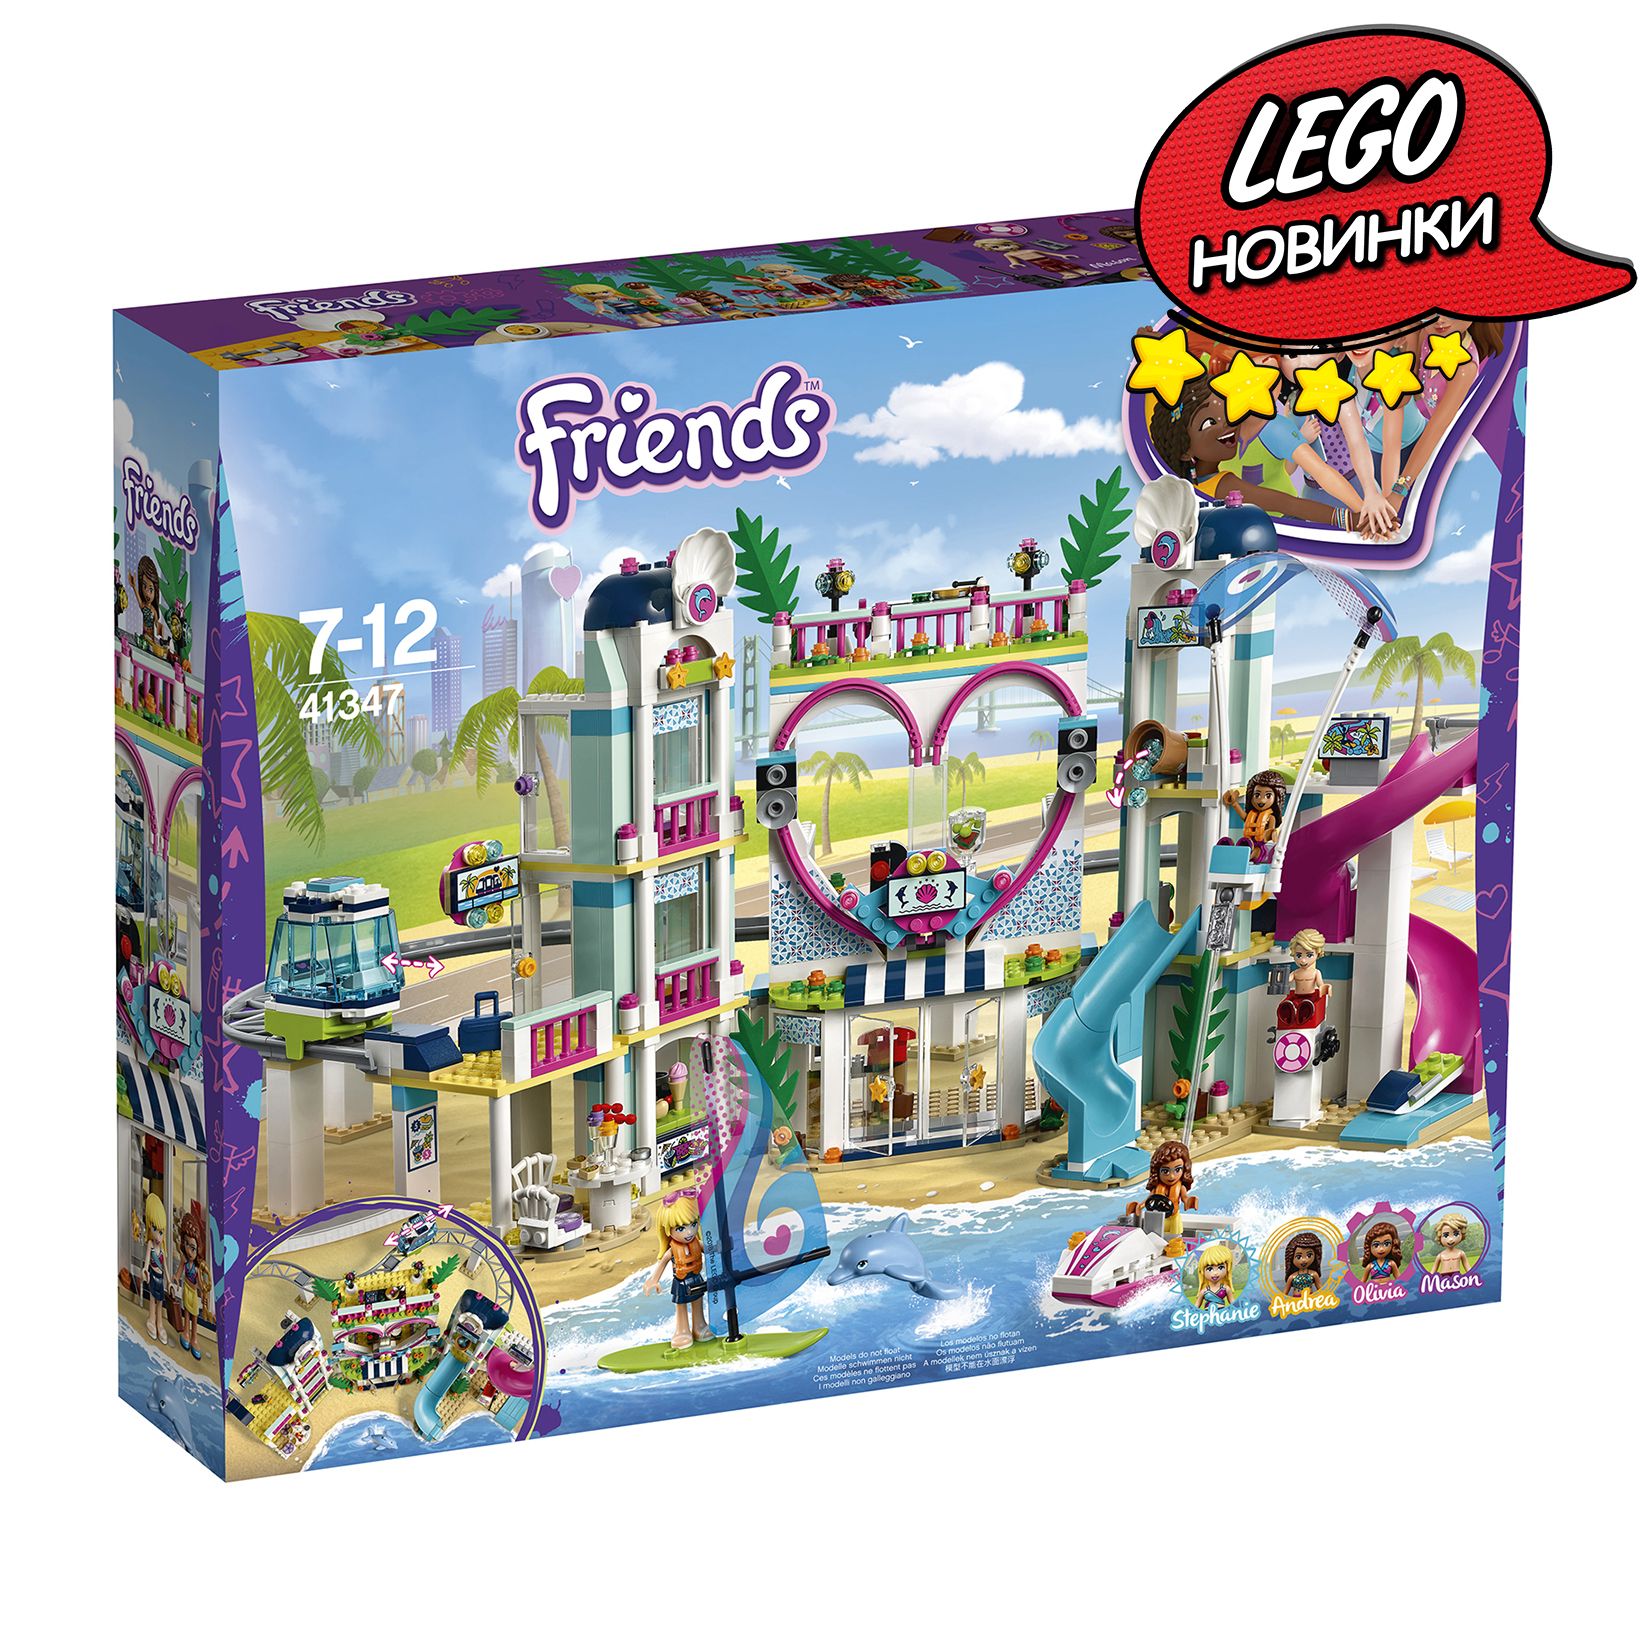 LEGO friends 41347